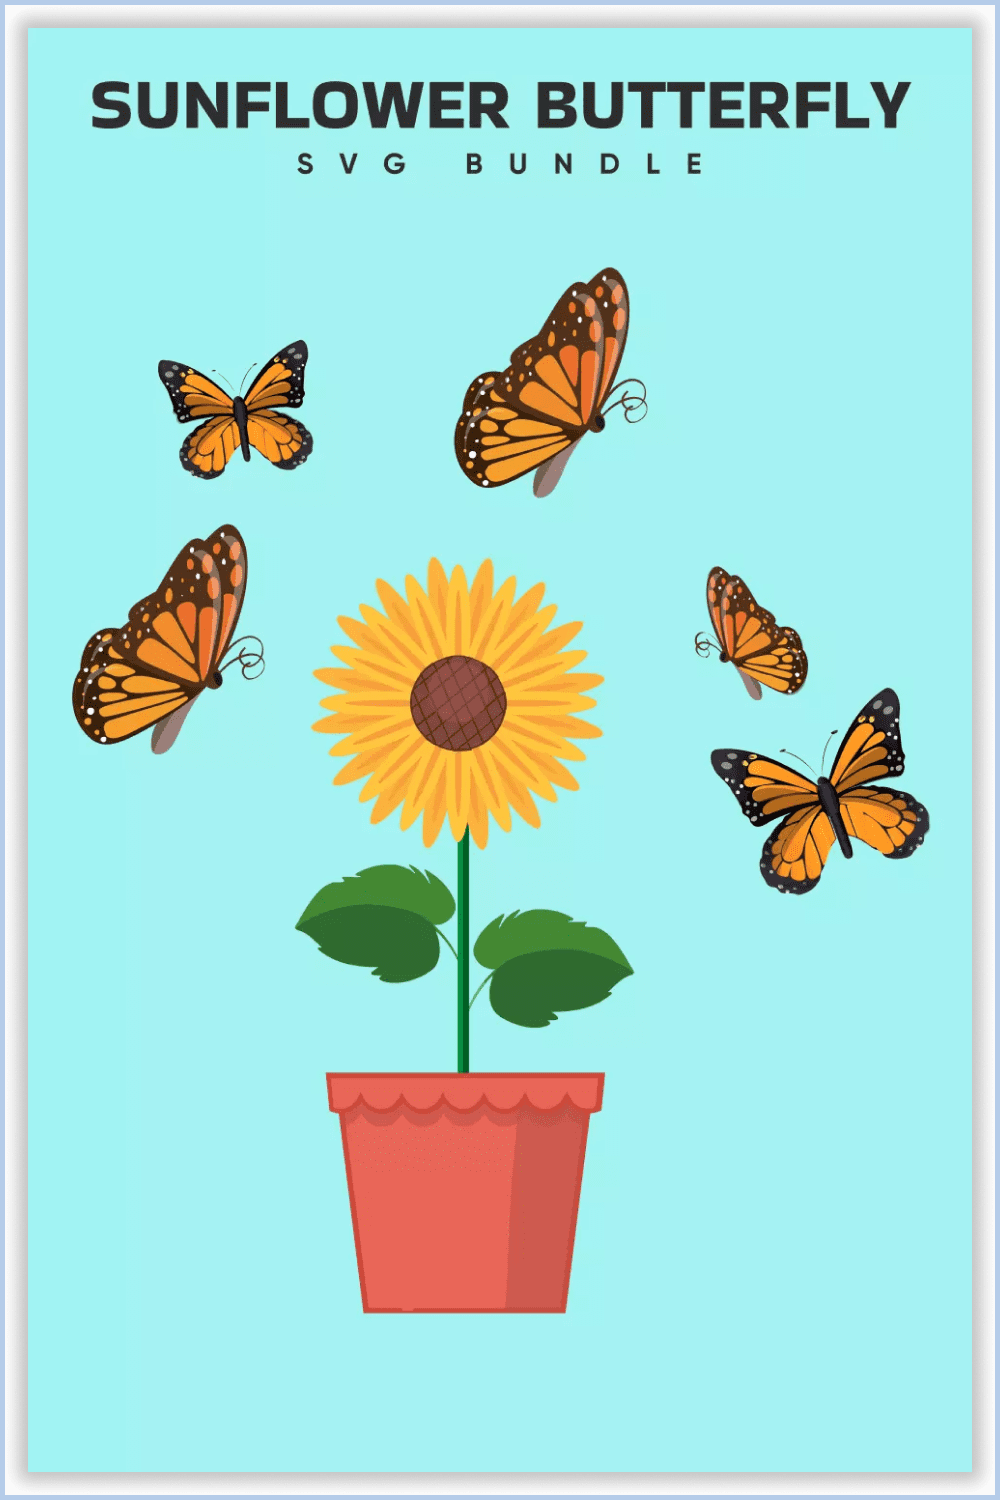 Orange butterflies fly around a potted sunflower.